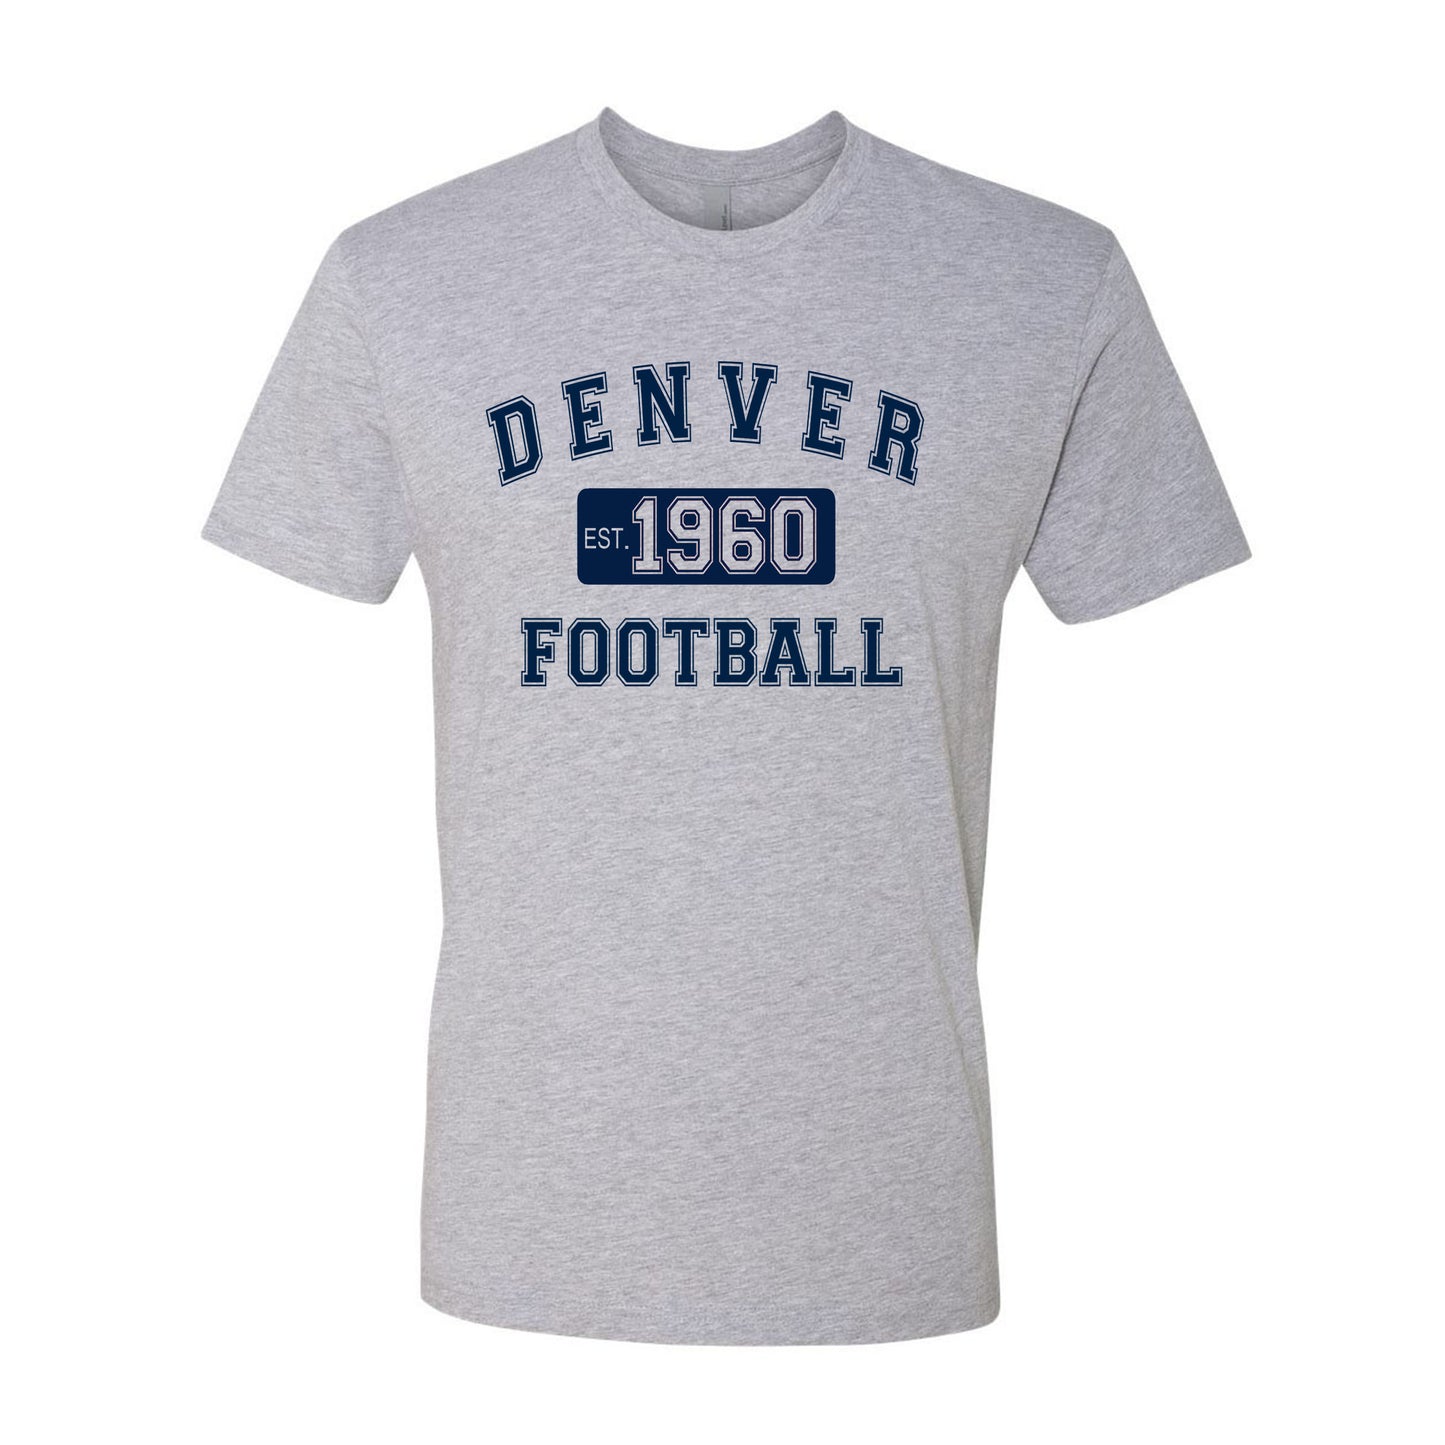 Denver Football EST 1960 Fans Game Day Tee Navy & Orange Collection